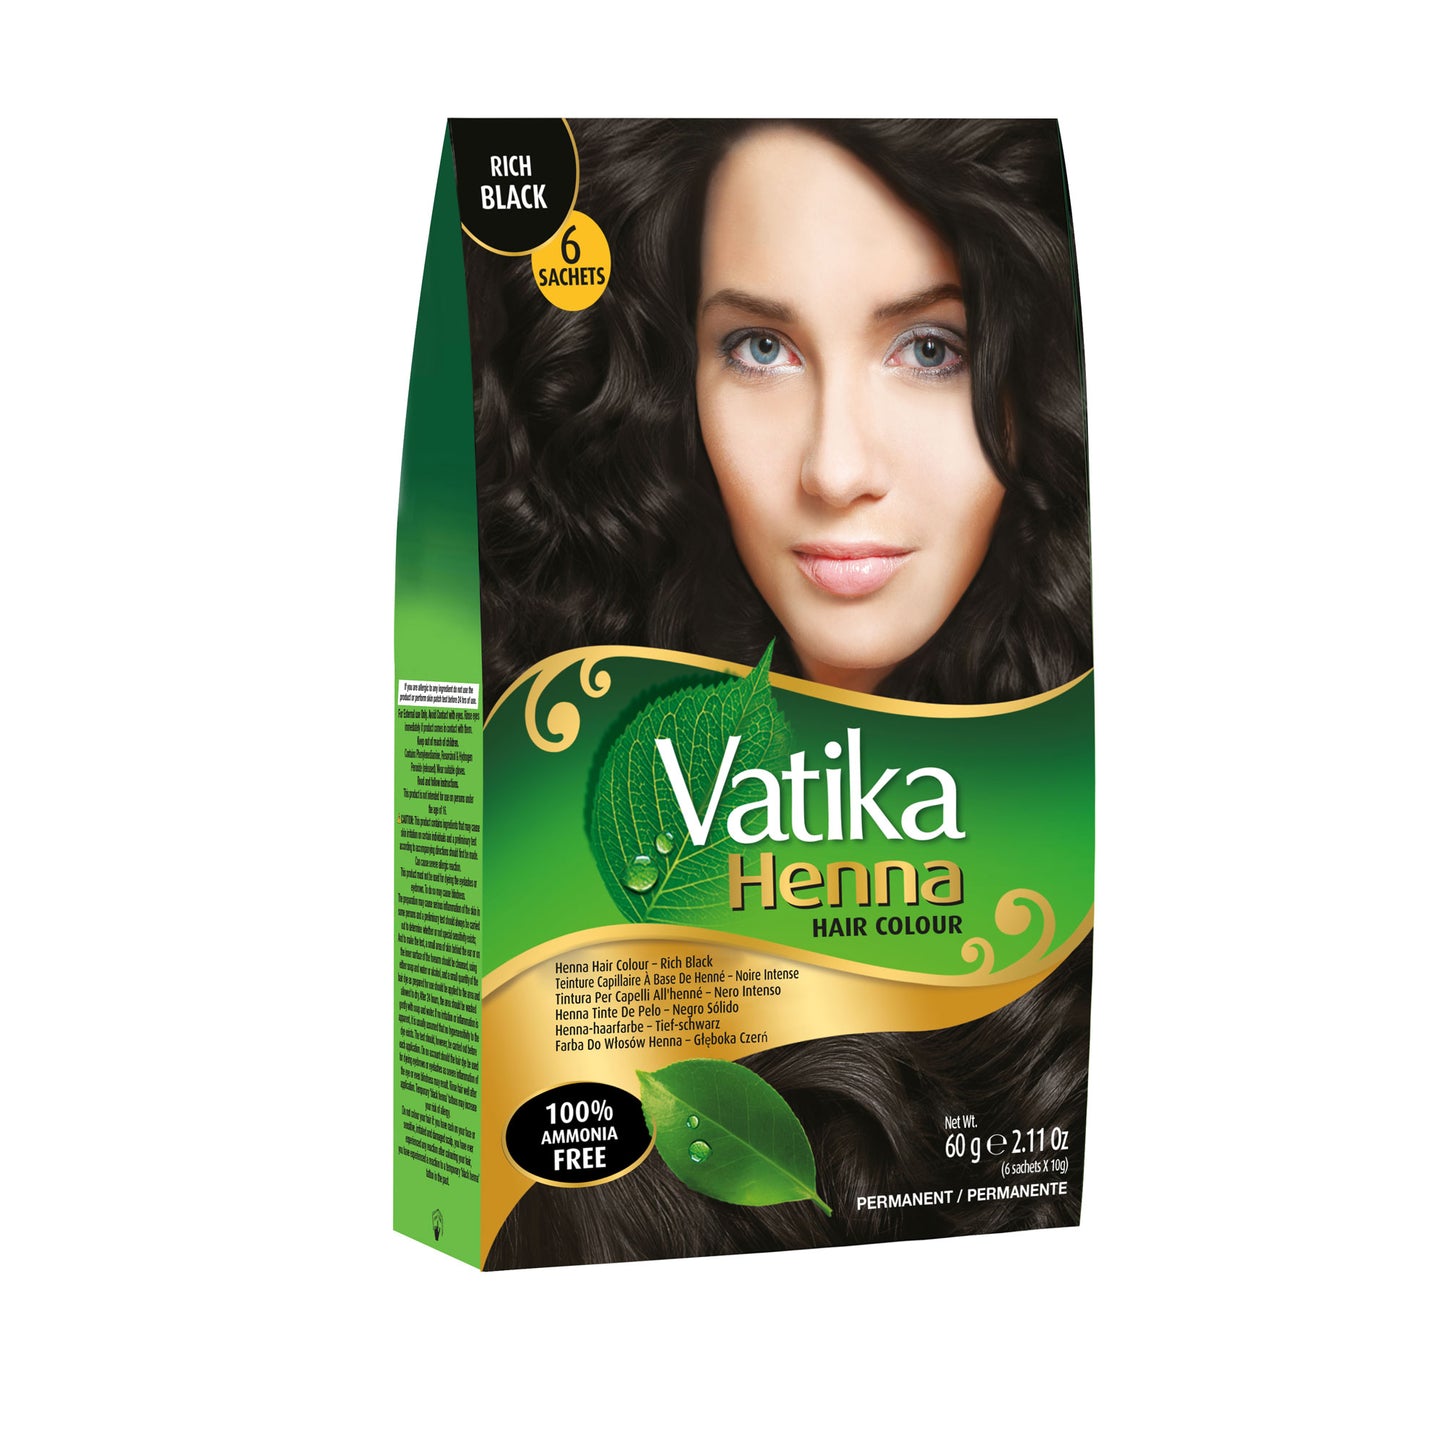 Vatika Henna Hair Color - Rich Black / Natural Black